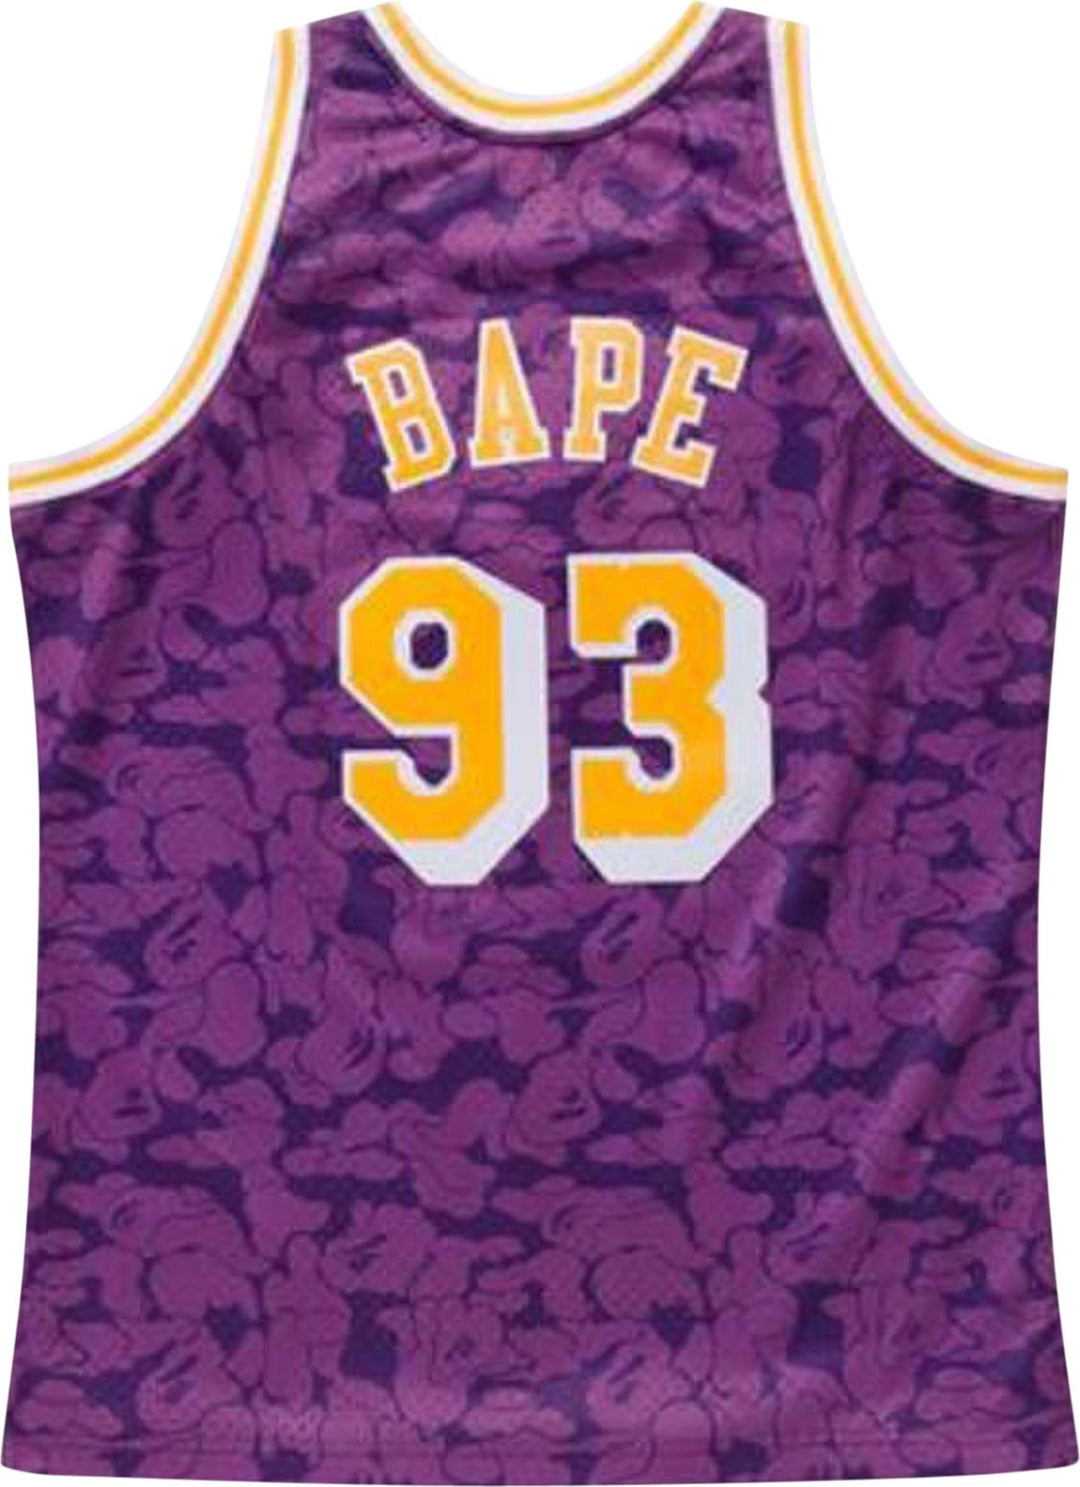 BAPE x M&N Lakers ABC Basketball Swingman Jersey